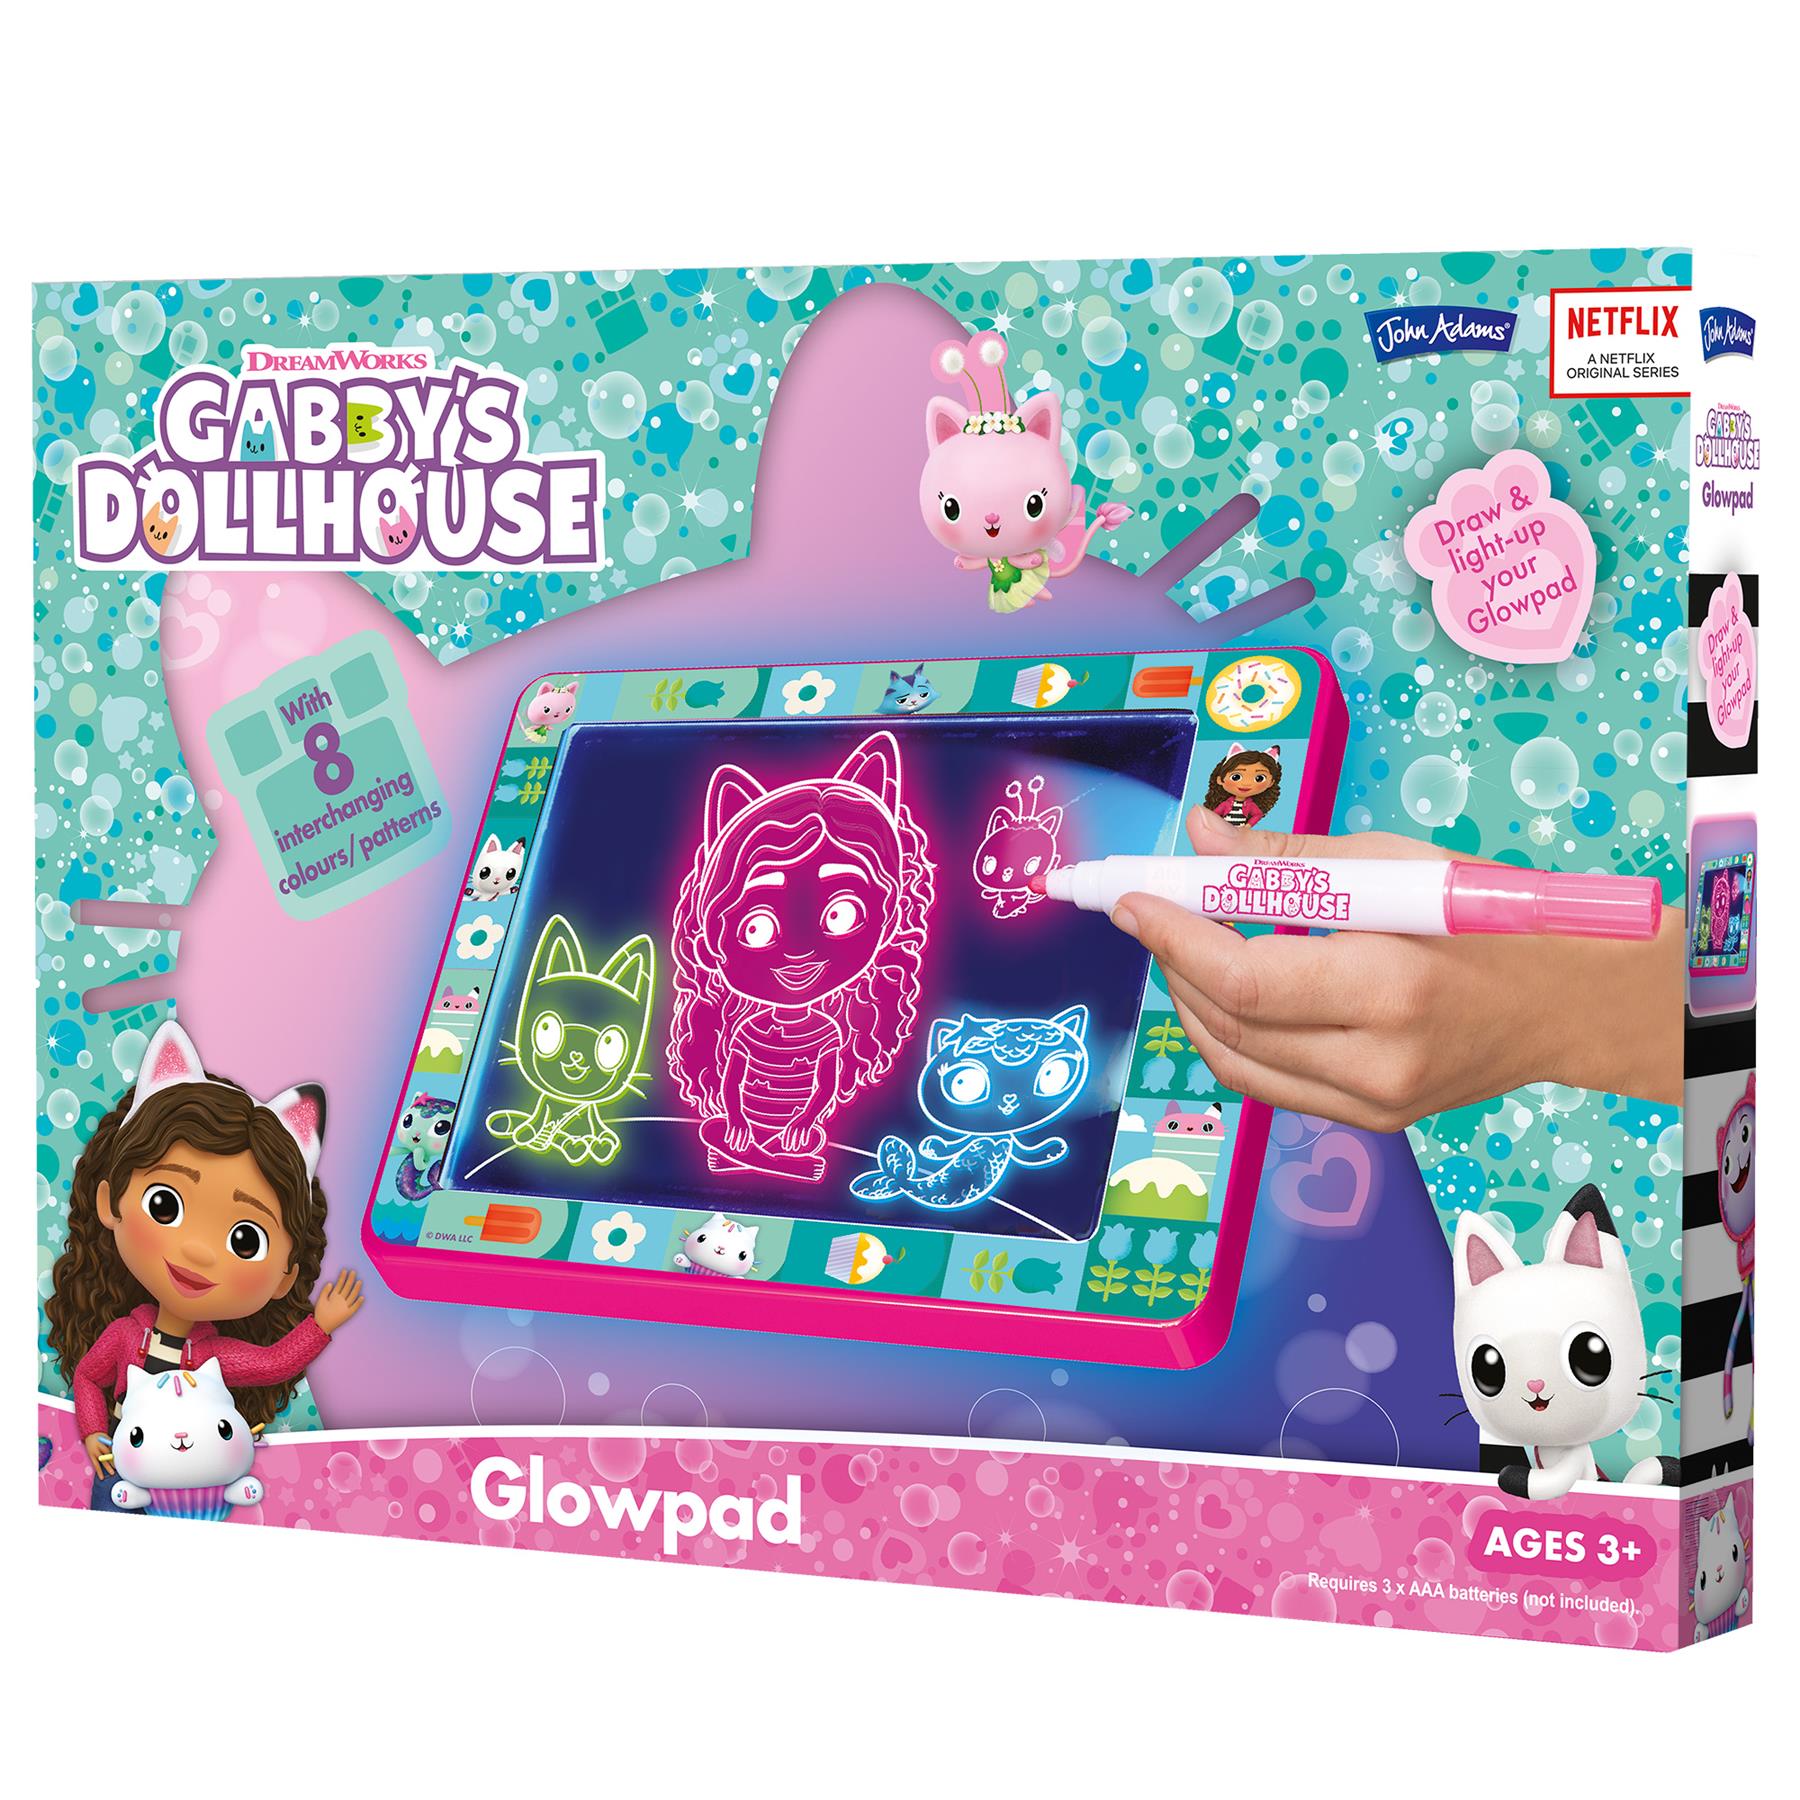 Gabby's Dollhouse Glowpad